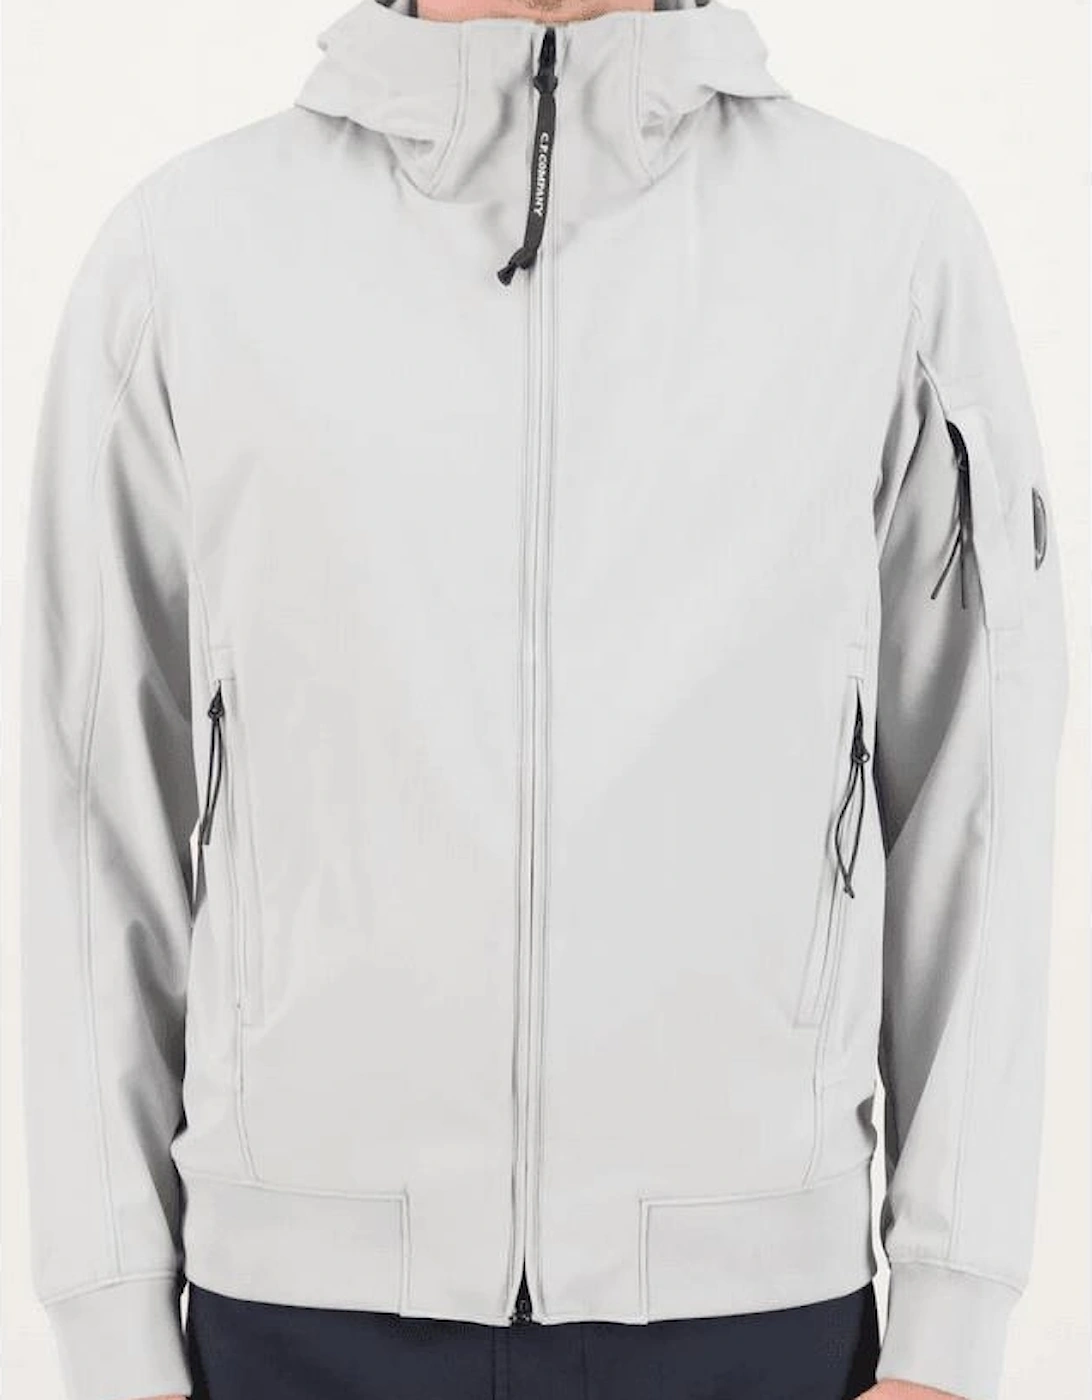 Shell-R Nylon Lightweight Hooded Grey Jacket